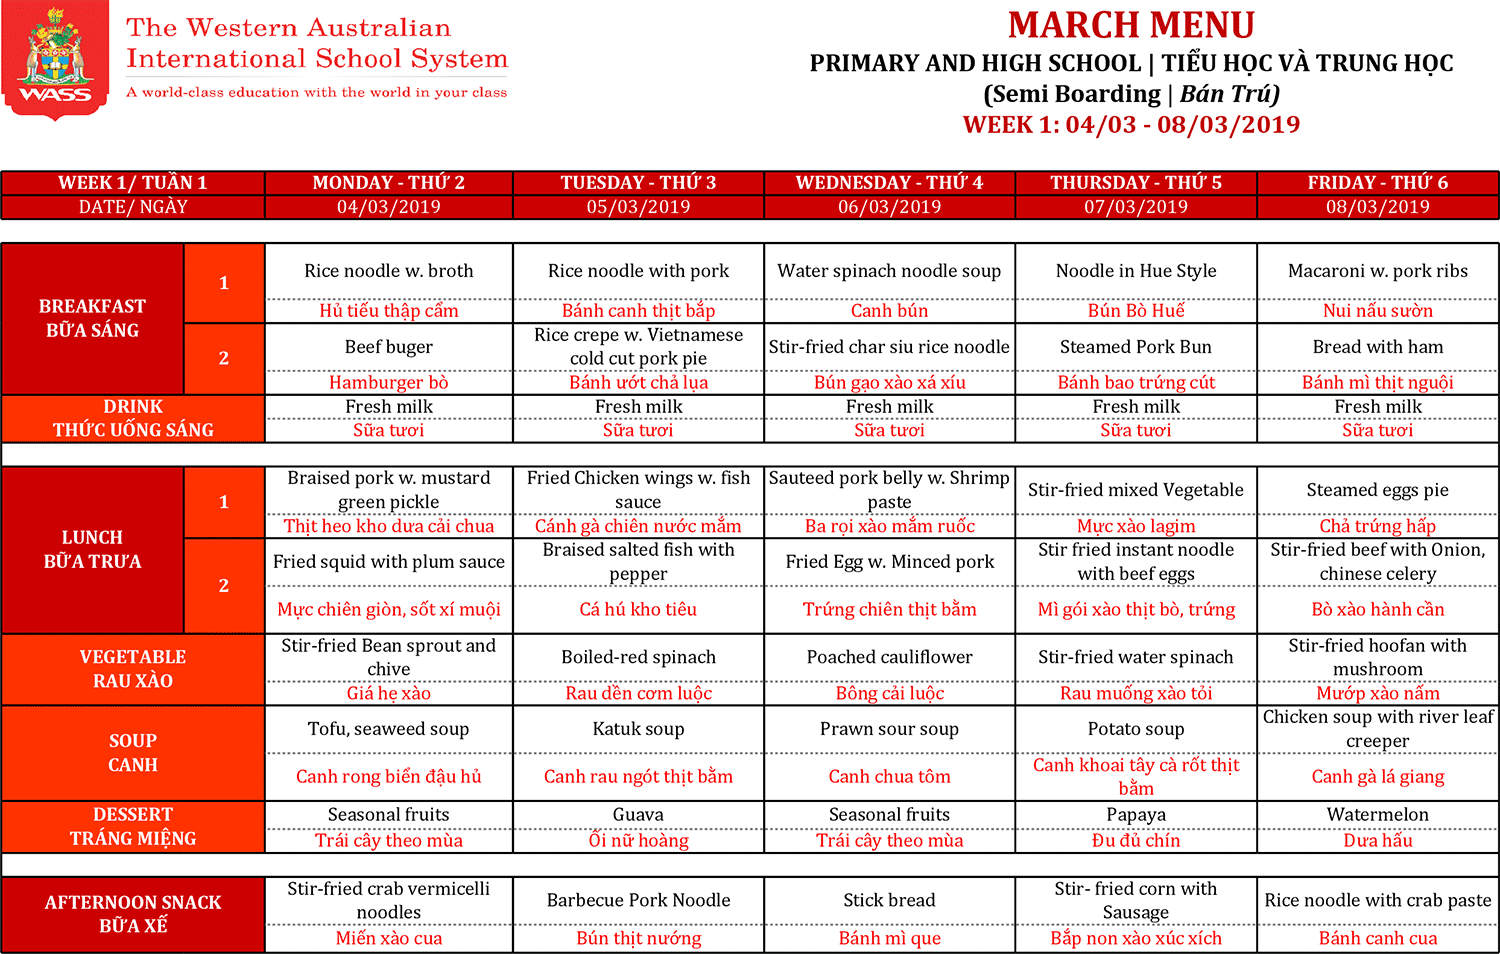 Menu in March 2019 - The Western Australian International School System